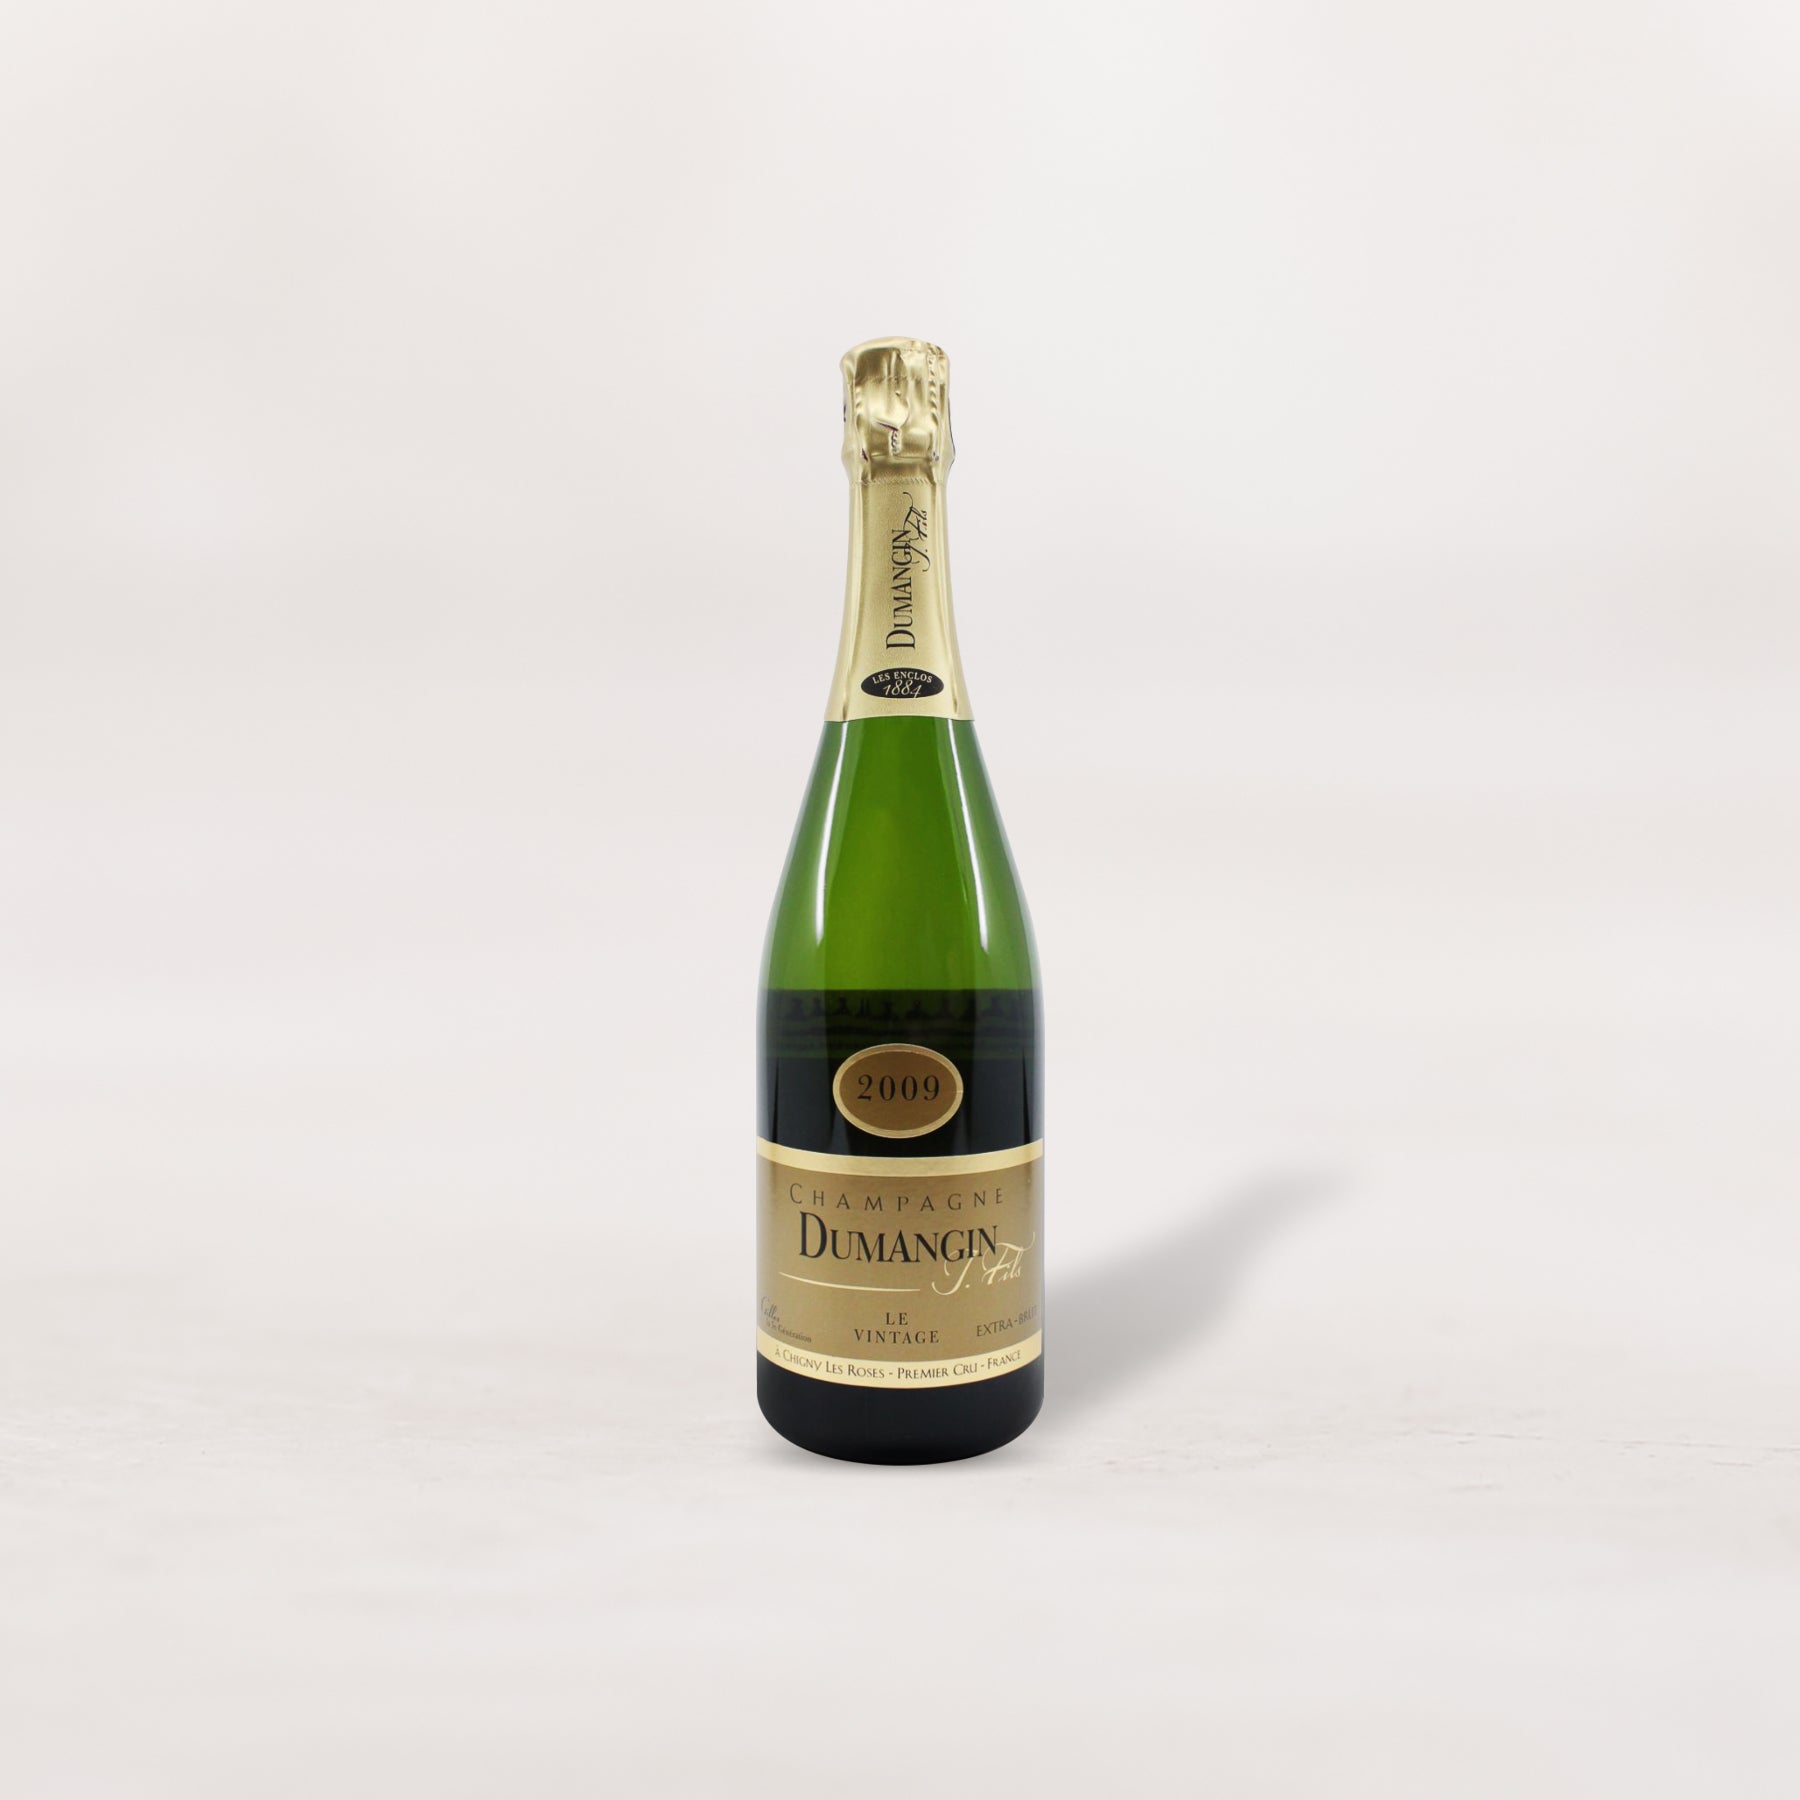 2009 Dumangin, Champagne Extra-Brut 1er Cru Millésime